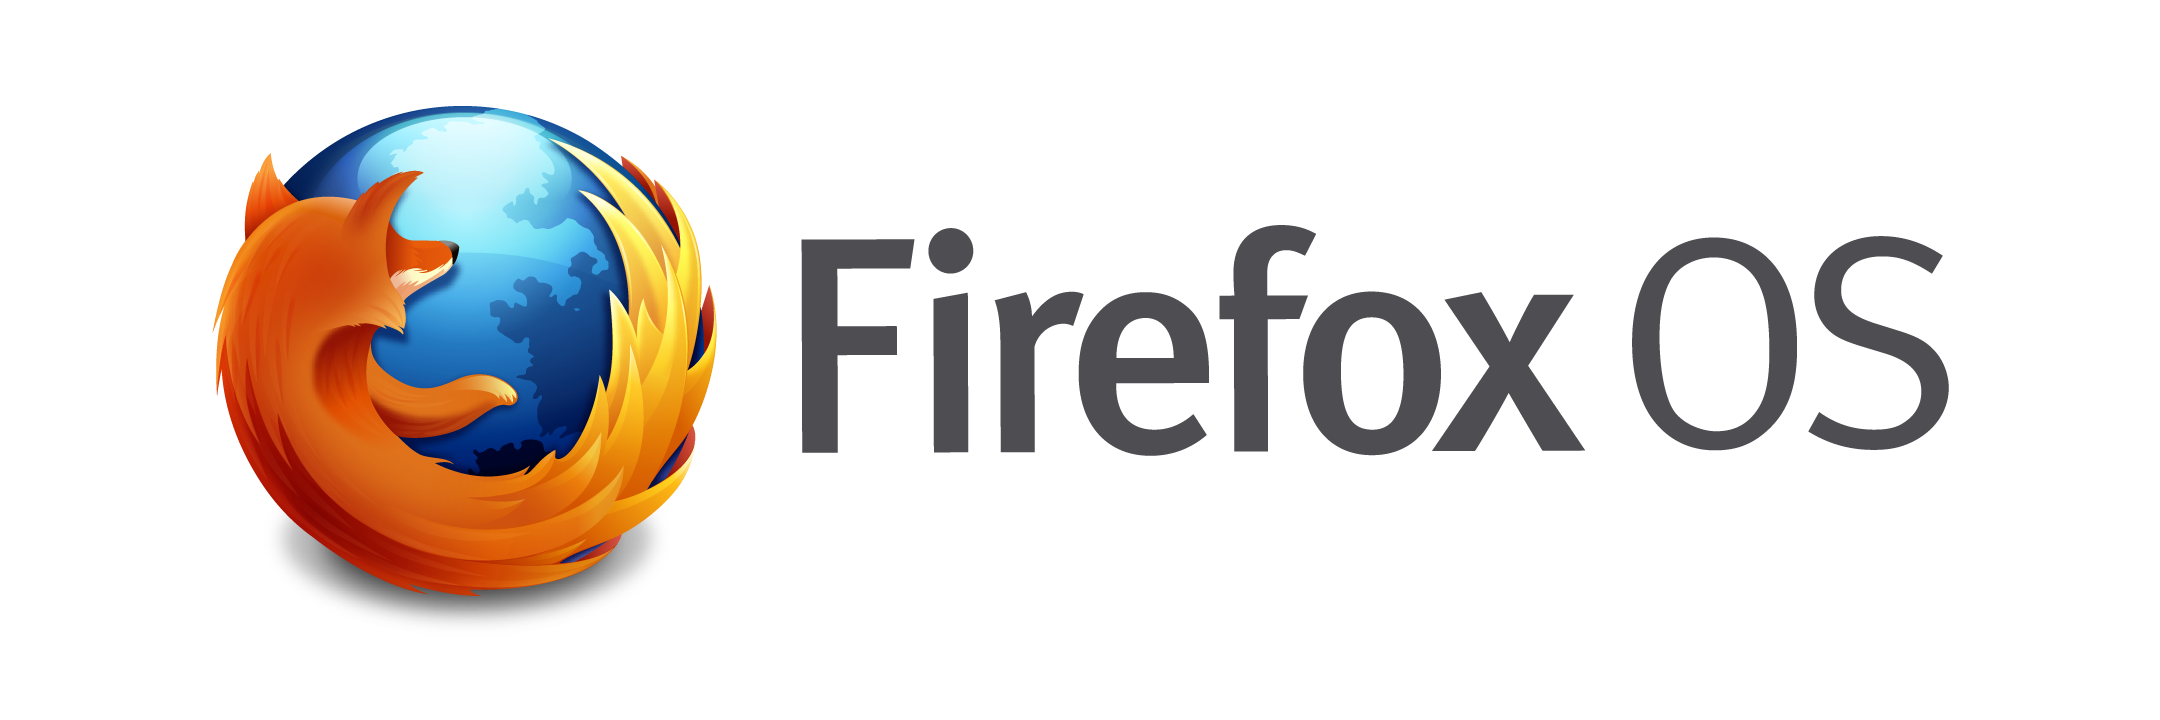 Firefox Os Logopedia Fandom